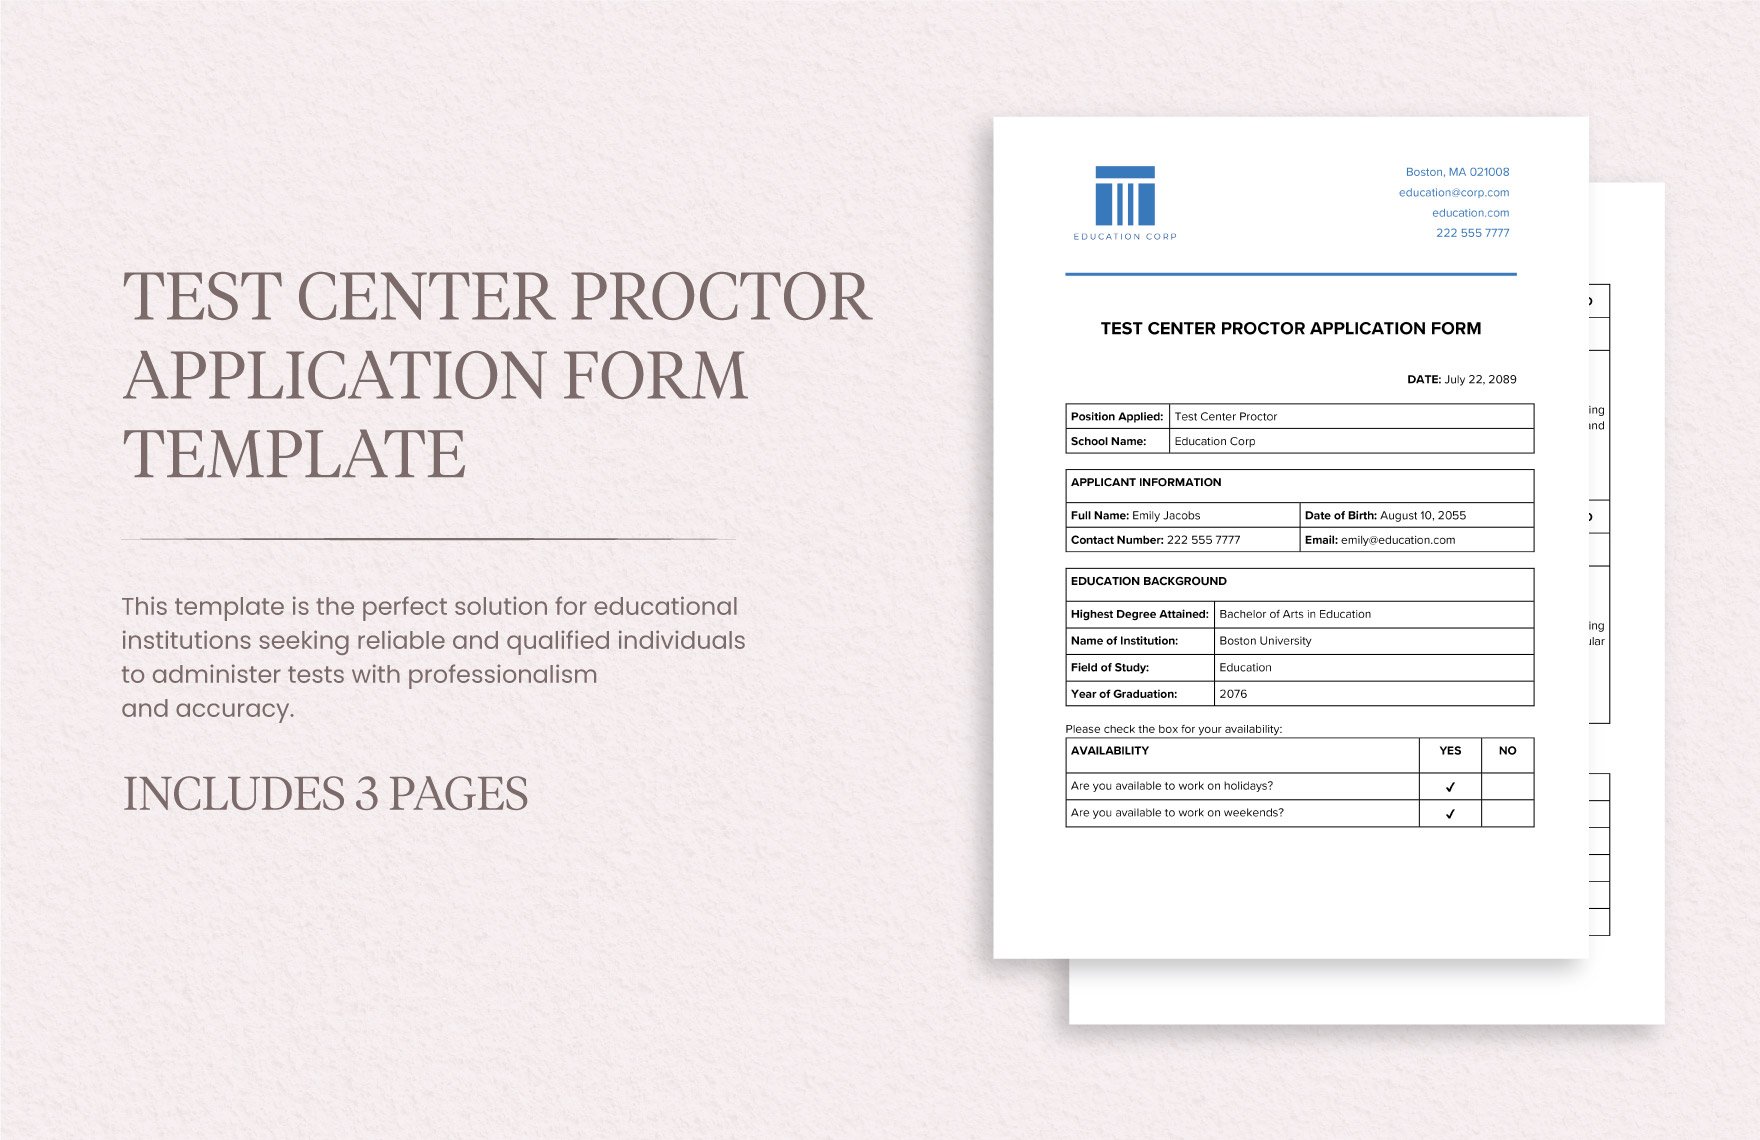 Test Center Proctor Application Form Template in Word, Google Docs, PDF